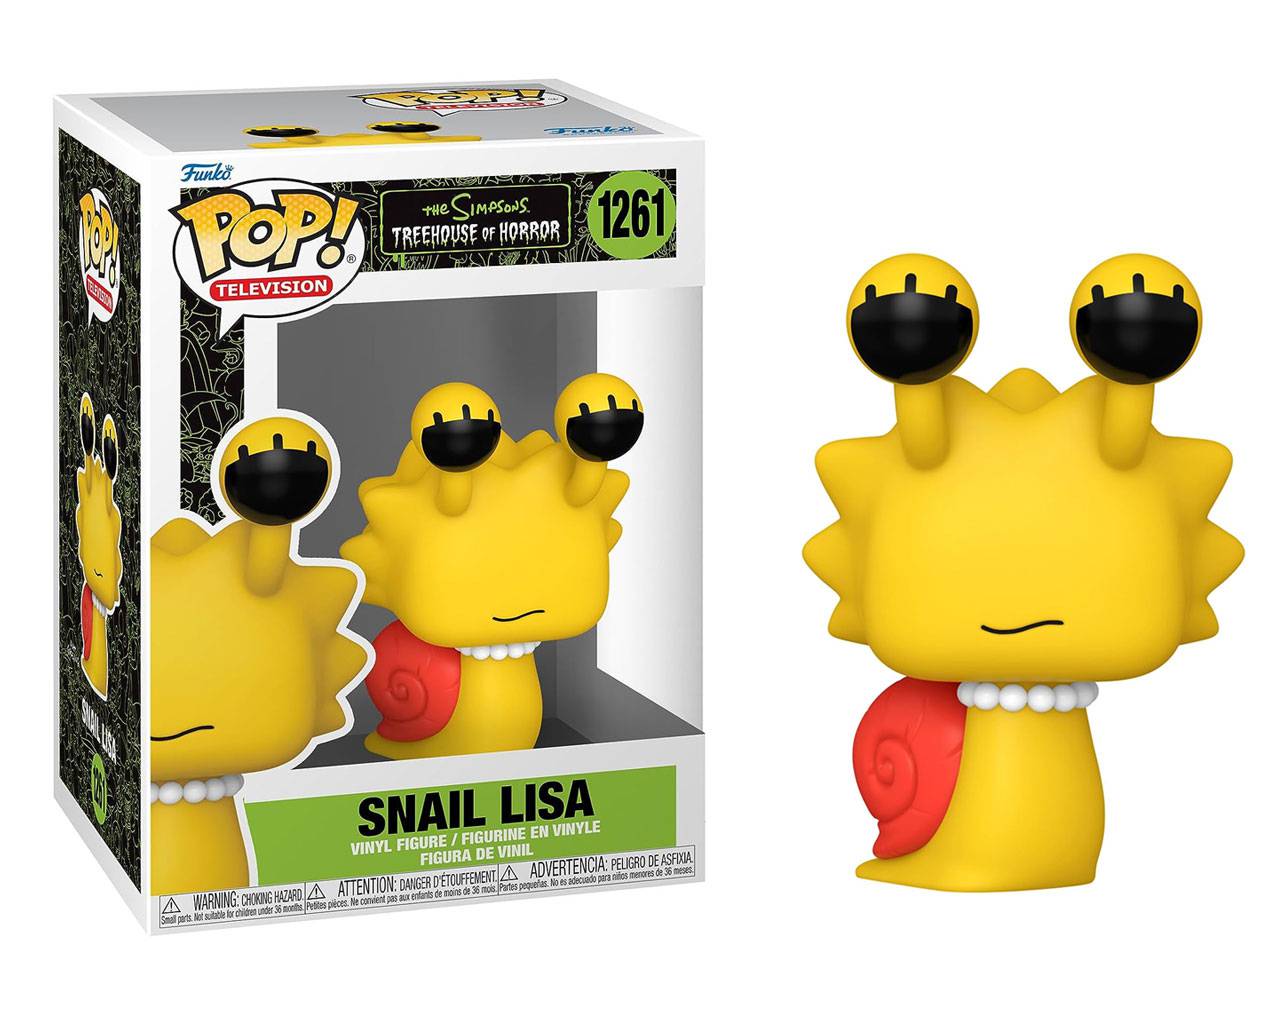 Snail Lisa (Treehouse of Horror) - The Simpsons Pop! Vinyl